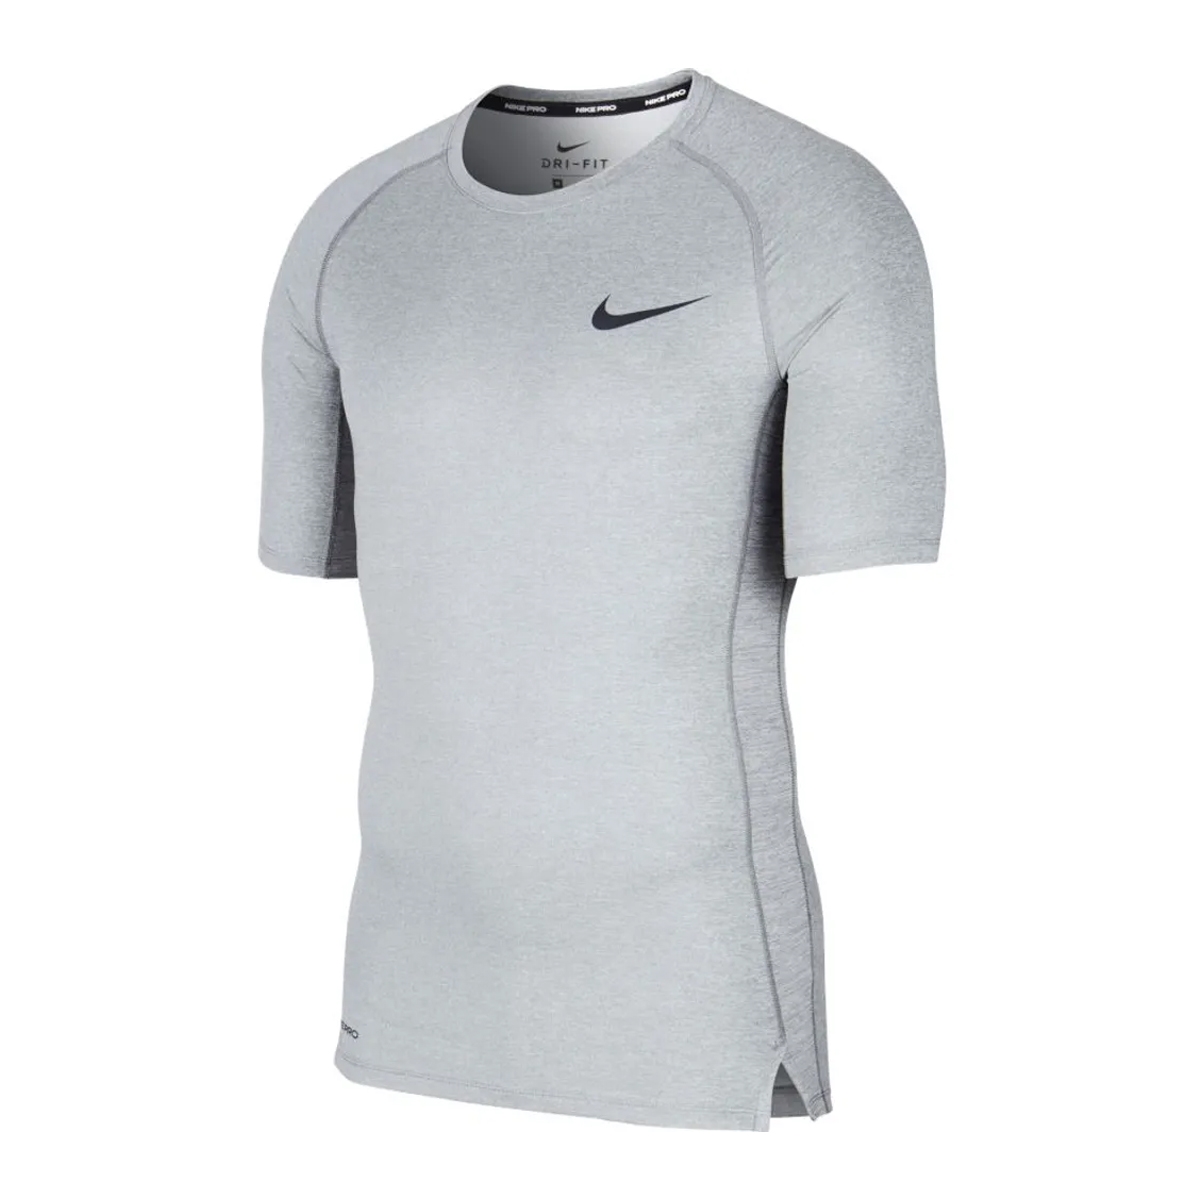 Camiseta Nike Pró - Masculina